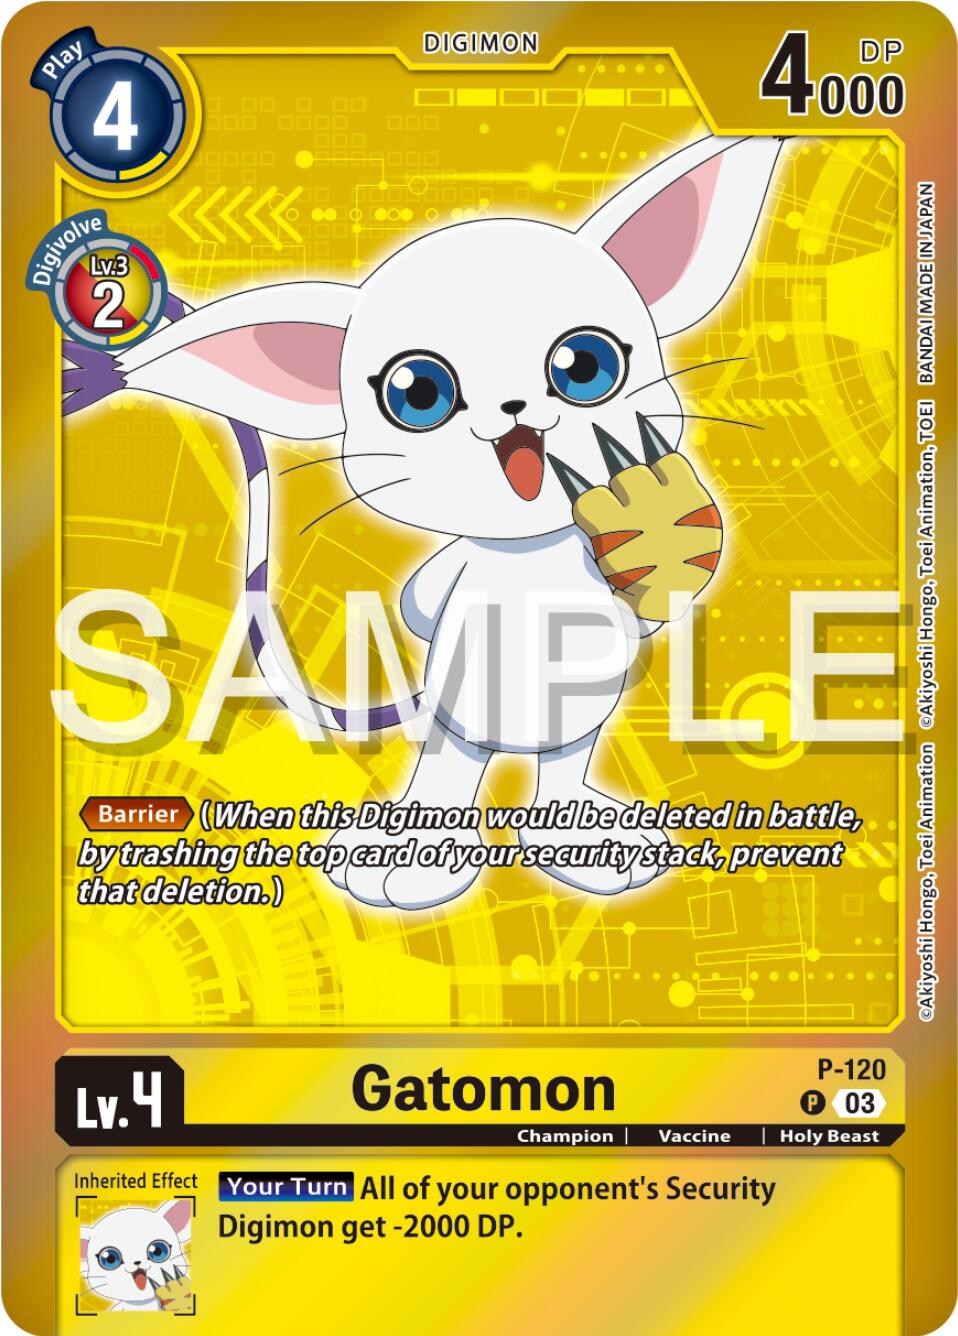 Gatomon [P-120] - P-120 (Digimon Adventure Box 2024) [Promotional Cards] | Total Play